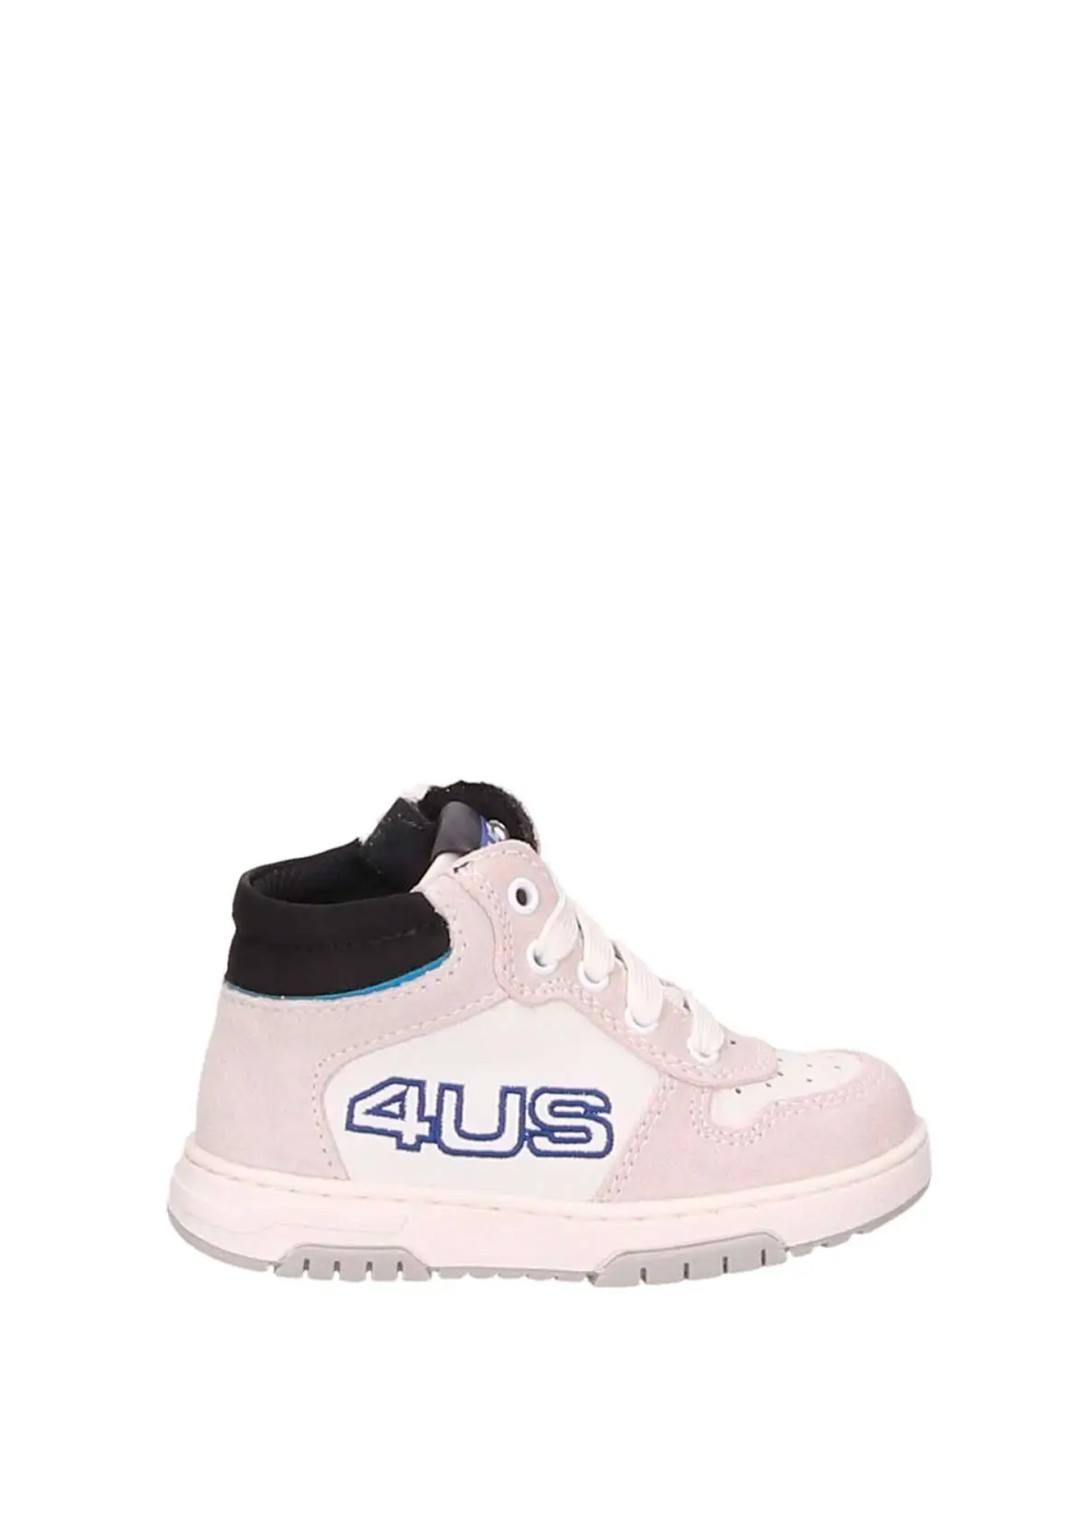 4US - Sneaker Alta - Bimbo - 42650 W